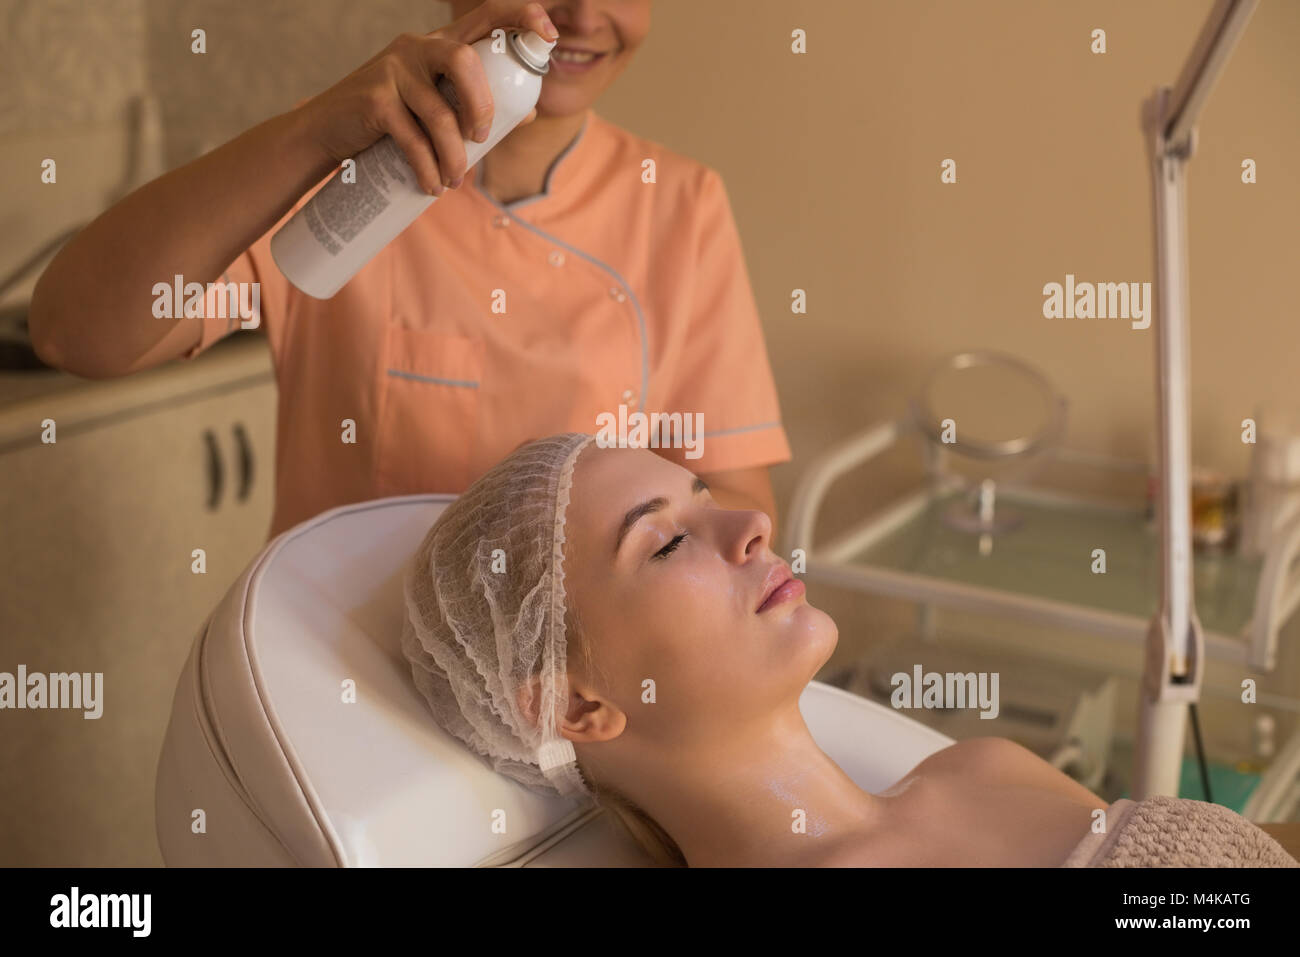 Beautician giving beauty treatment to female customer Stock Photo